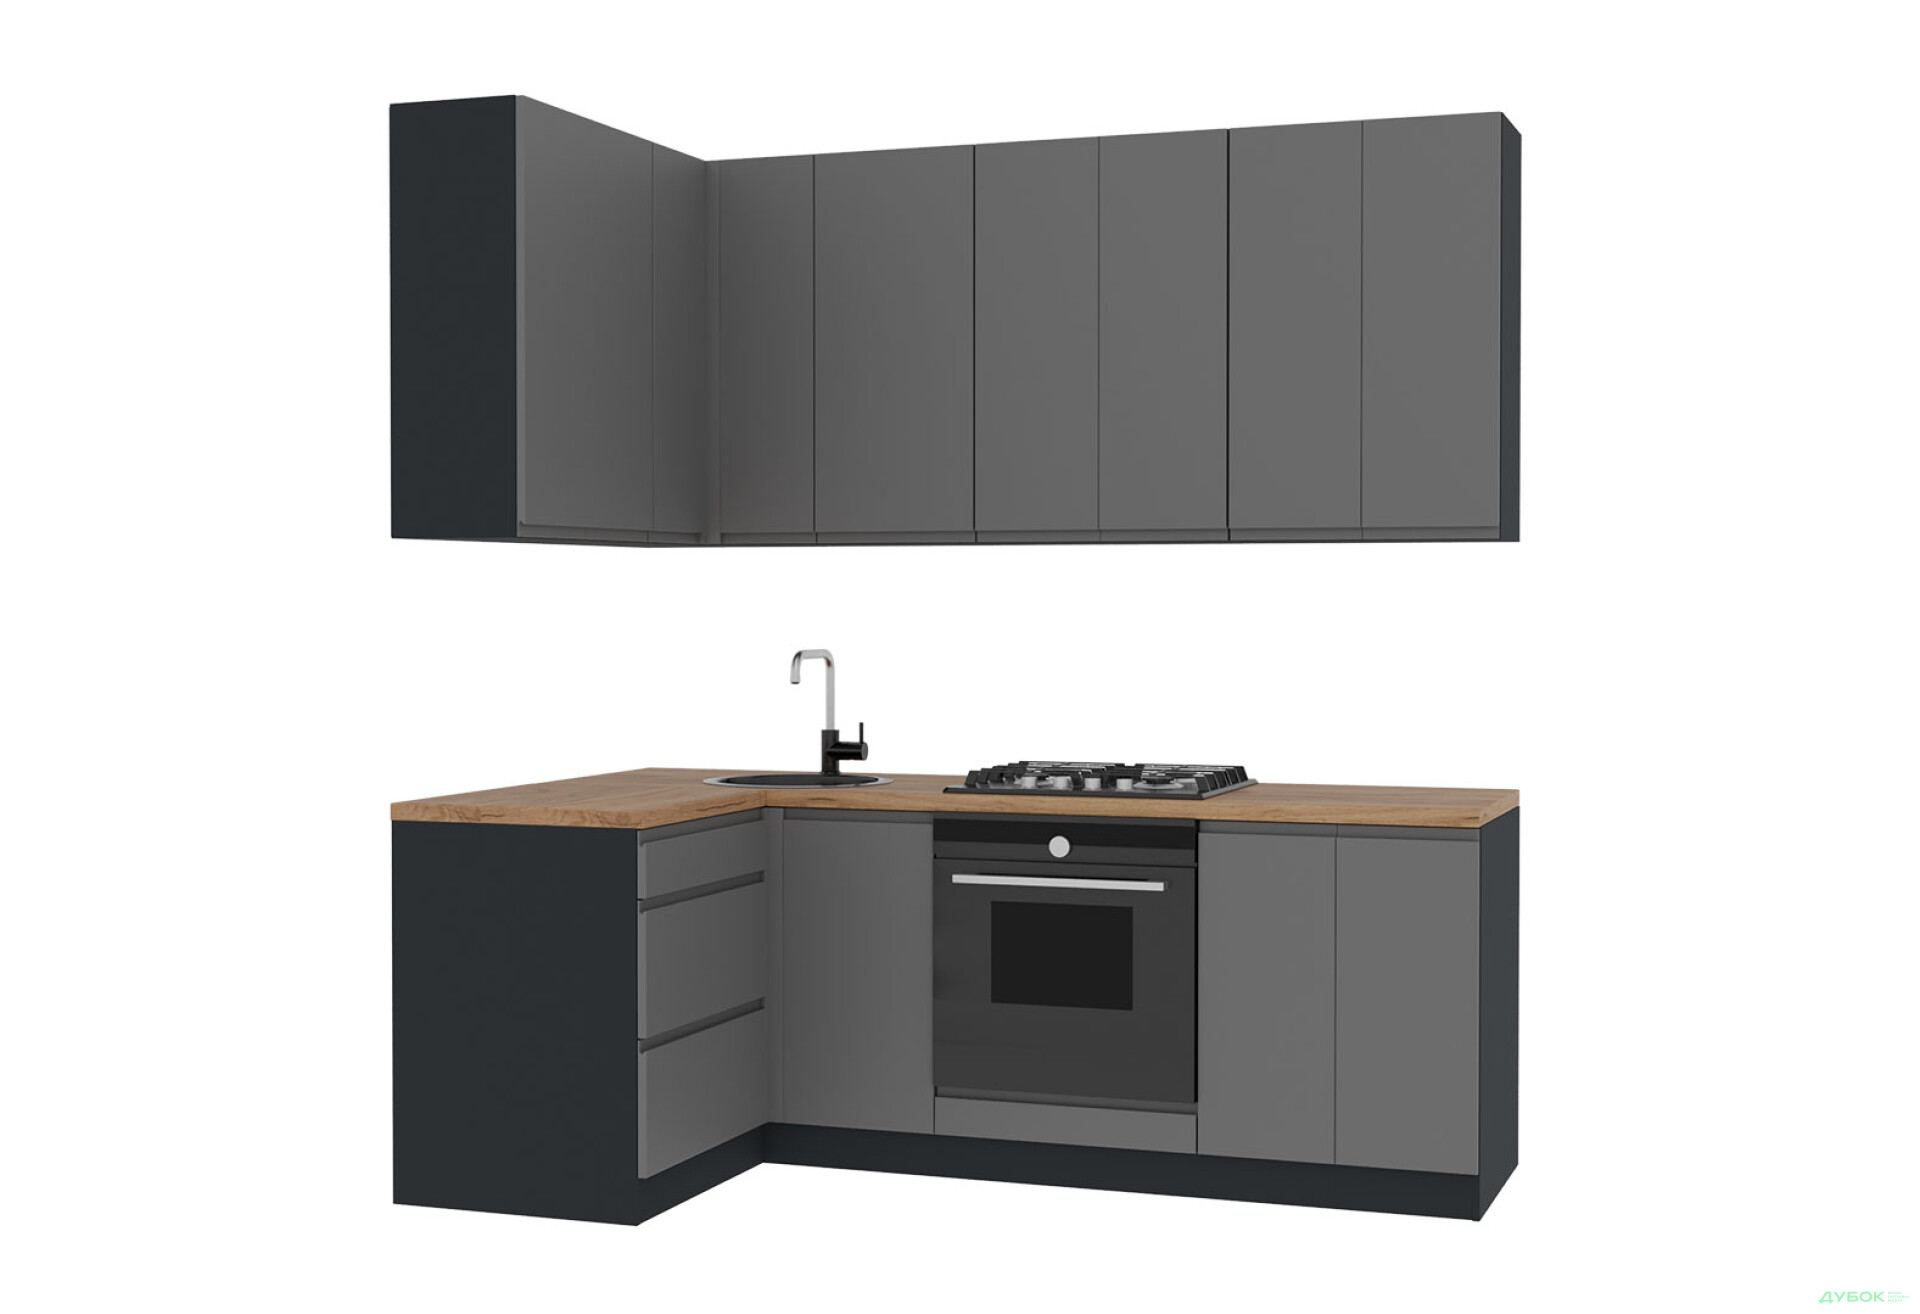 Фото 3 - Кухня Вип-Мастер Интерно Люкс / Interno Luxe 2.2x1.2 м, антрацит / темно-серый мат